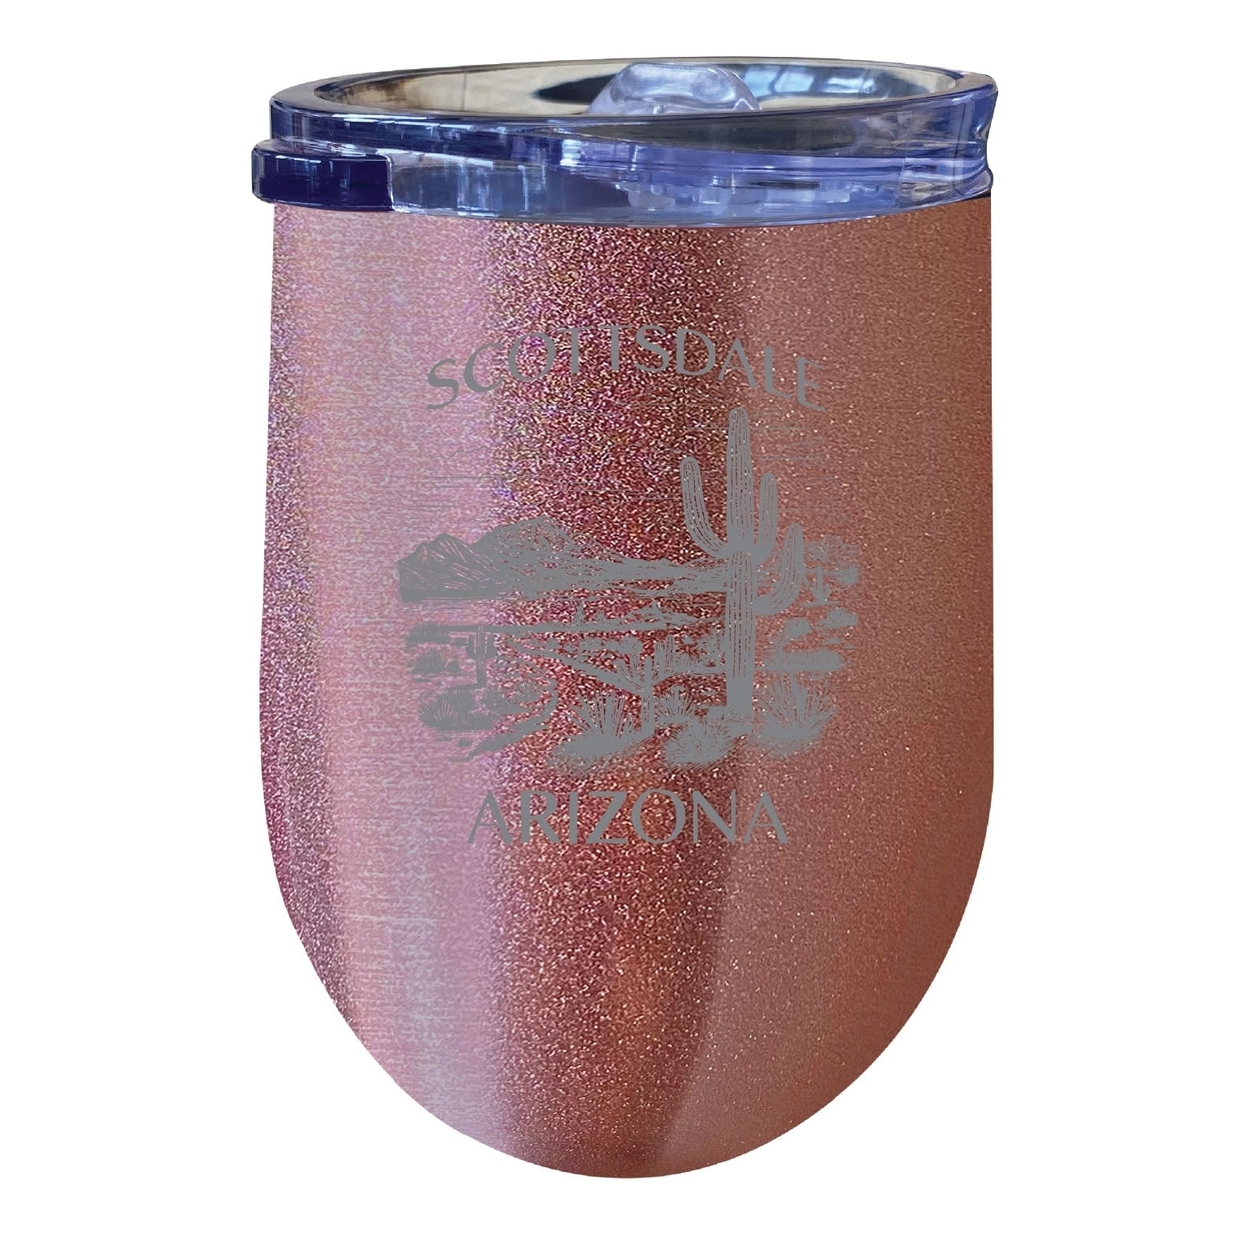 Scottsdale Arizona Souvenir 12 Oz Engraved Insulated Wine Stainless Steel Tumbler - Rose Gold,,Single Unit